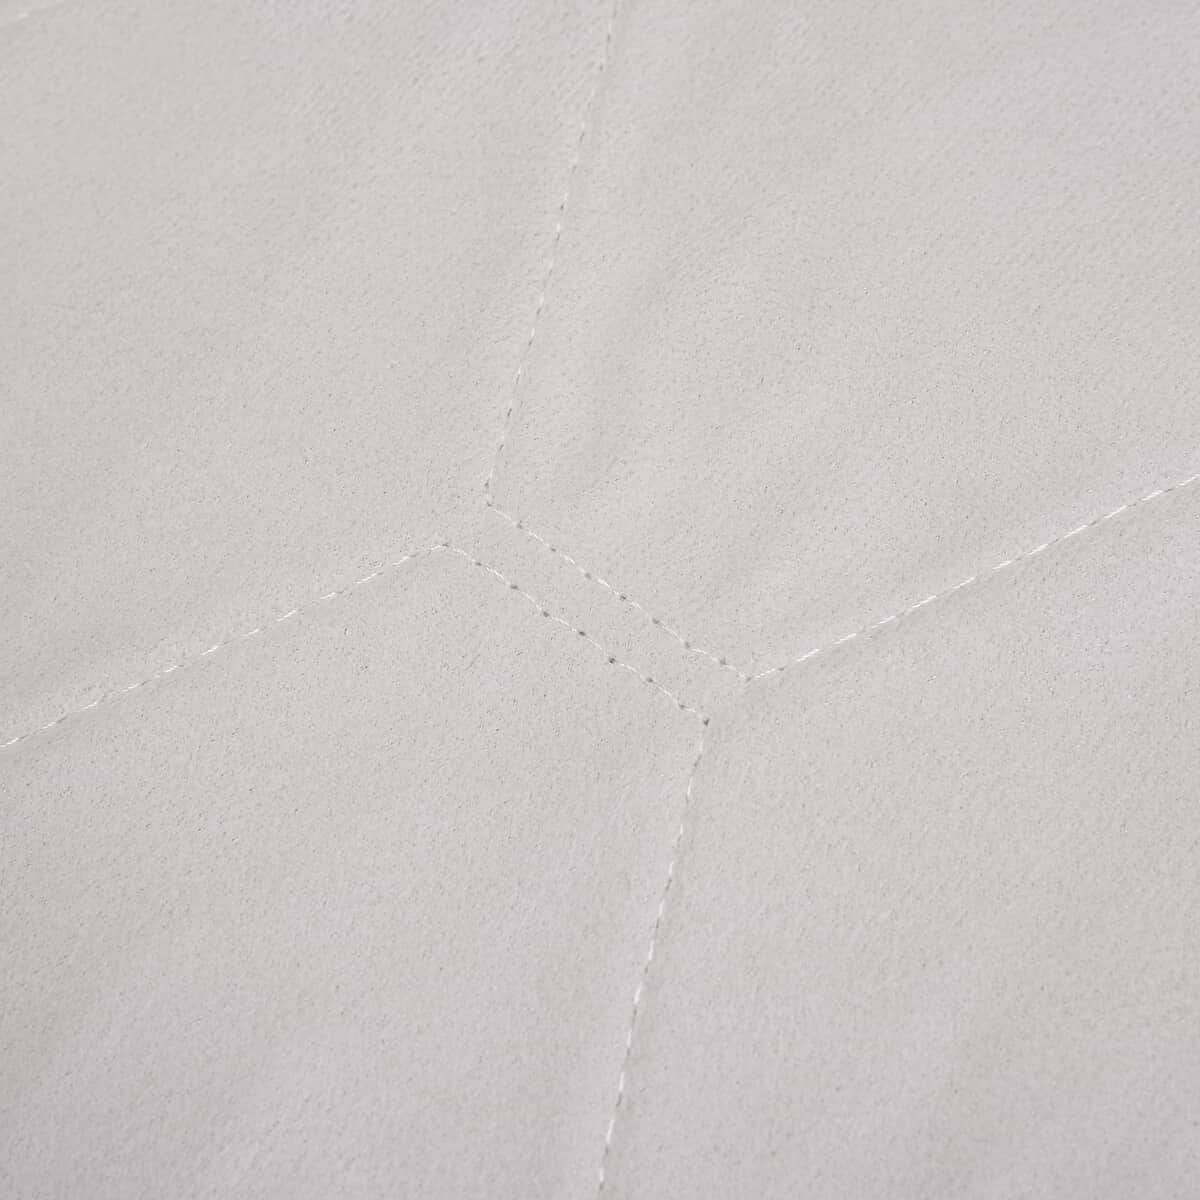 HOMESMART Brown Faux Fur Carpet (23.6"x35.4") image number 4